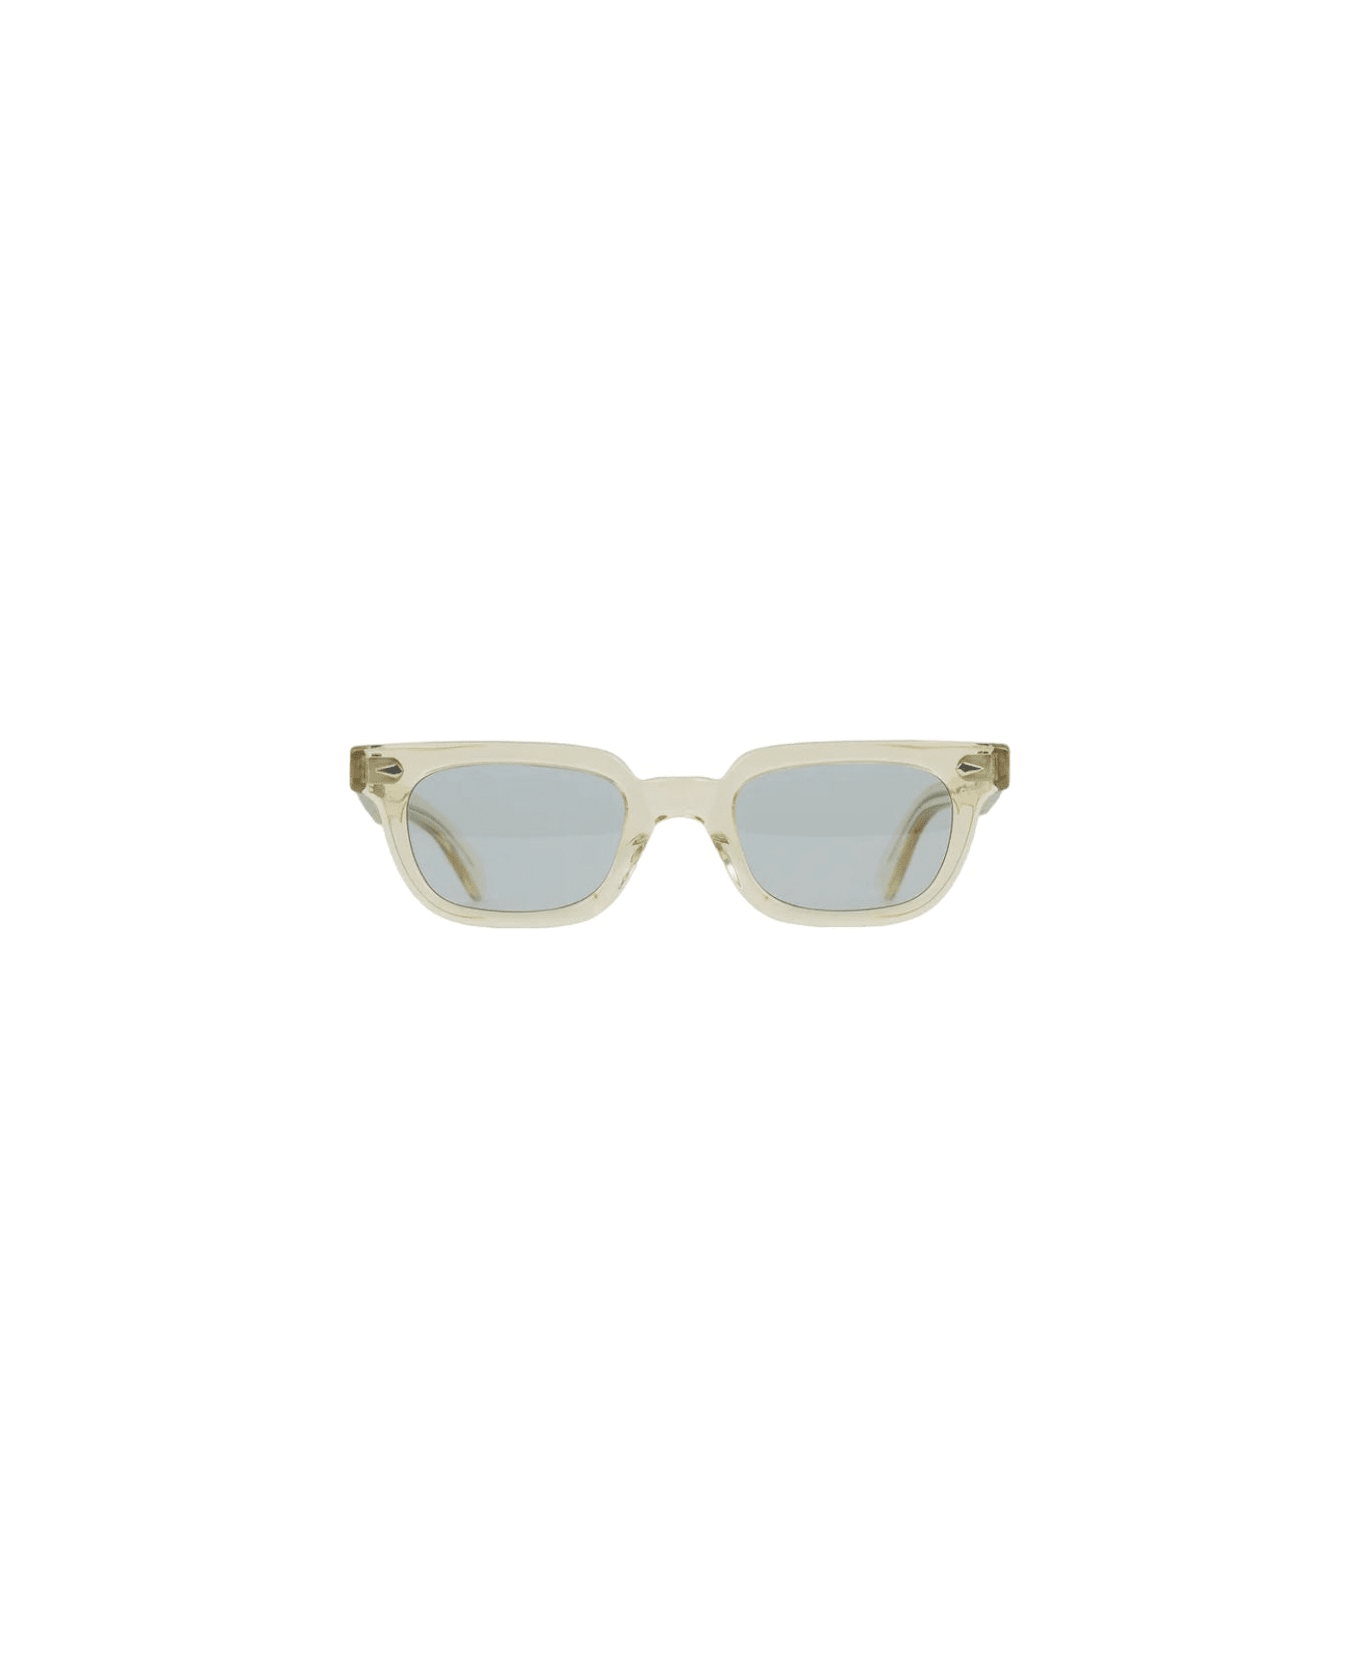 Julius Tart Optical T-man - Champagne Sunglasses